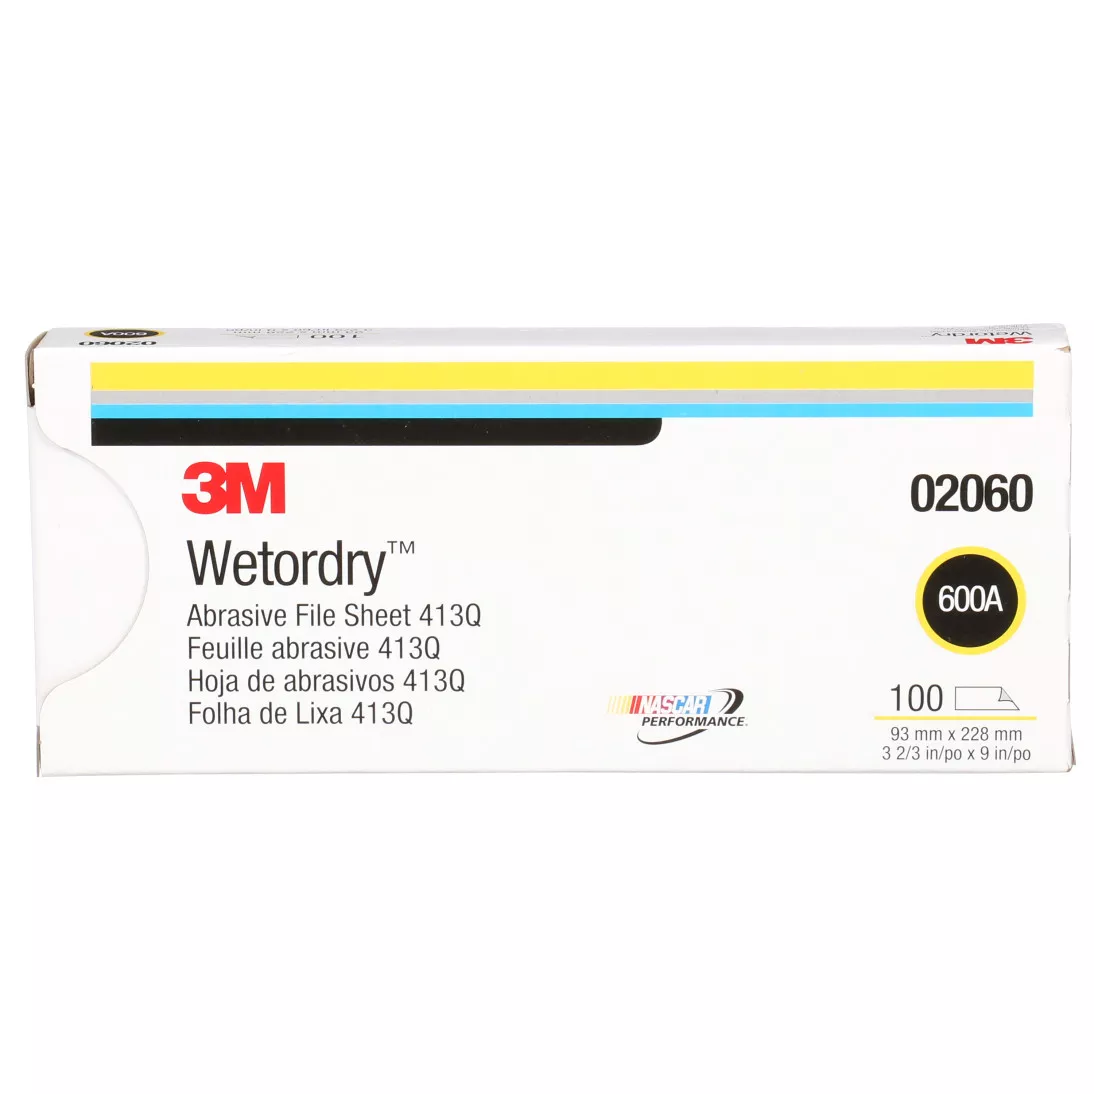 3M™ Wetordry™ Abrasive Sheet 413Q, 02060, 600, 3 2/3 in x 9 in, 100
Sheets/Carton, 10 Cartons/Case